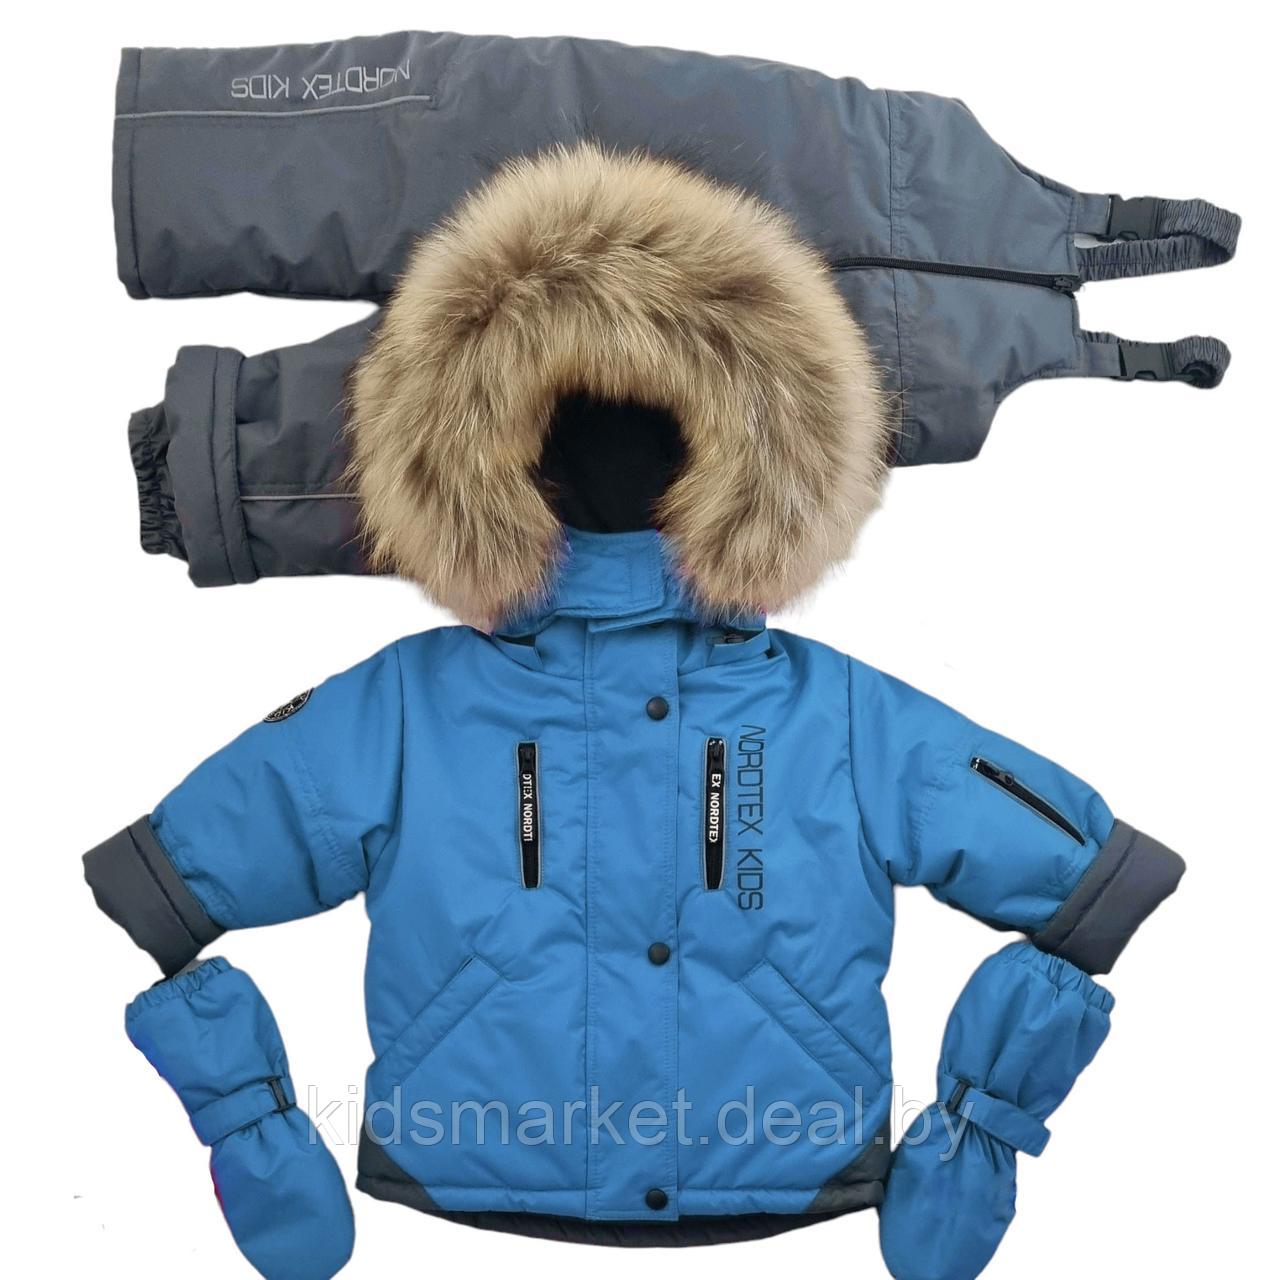 Детский зимний костюм (куртка + комбинезон) Nordtex Kids мембрана голубой (Размеры:86)